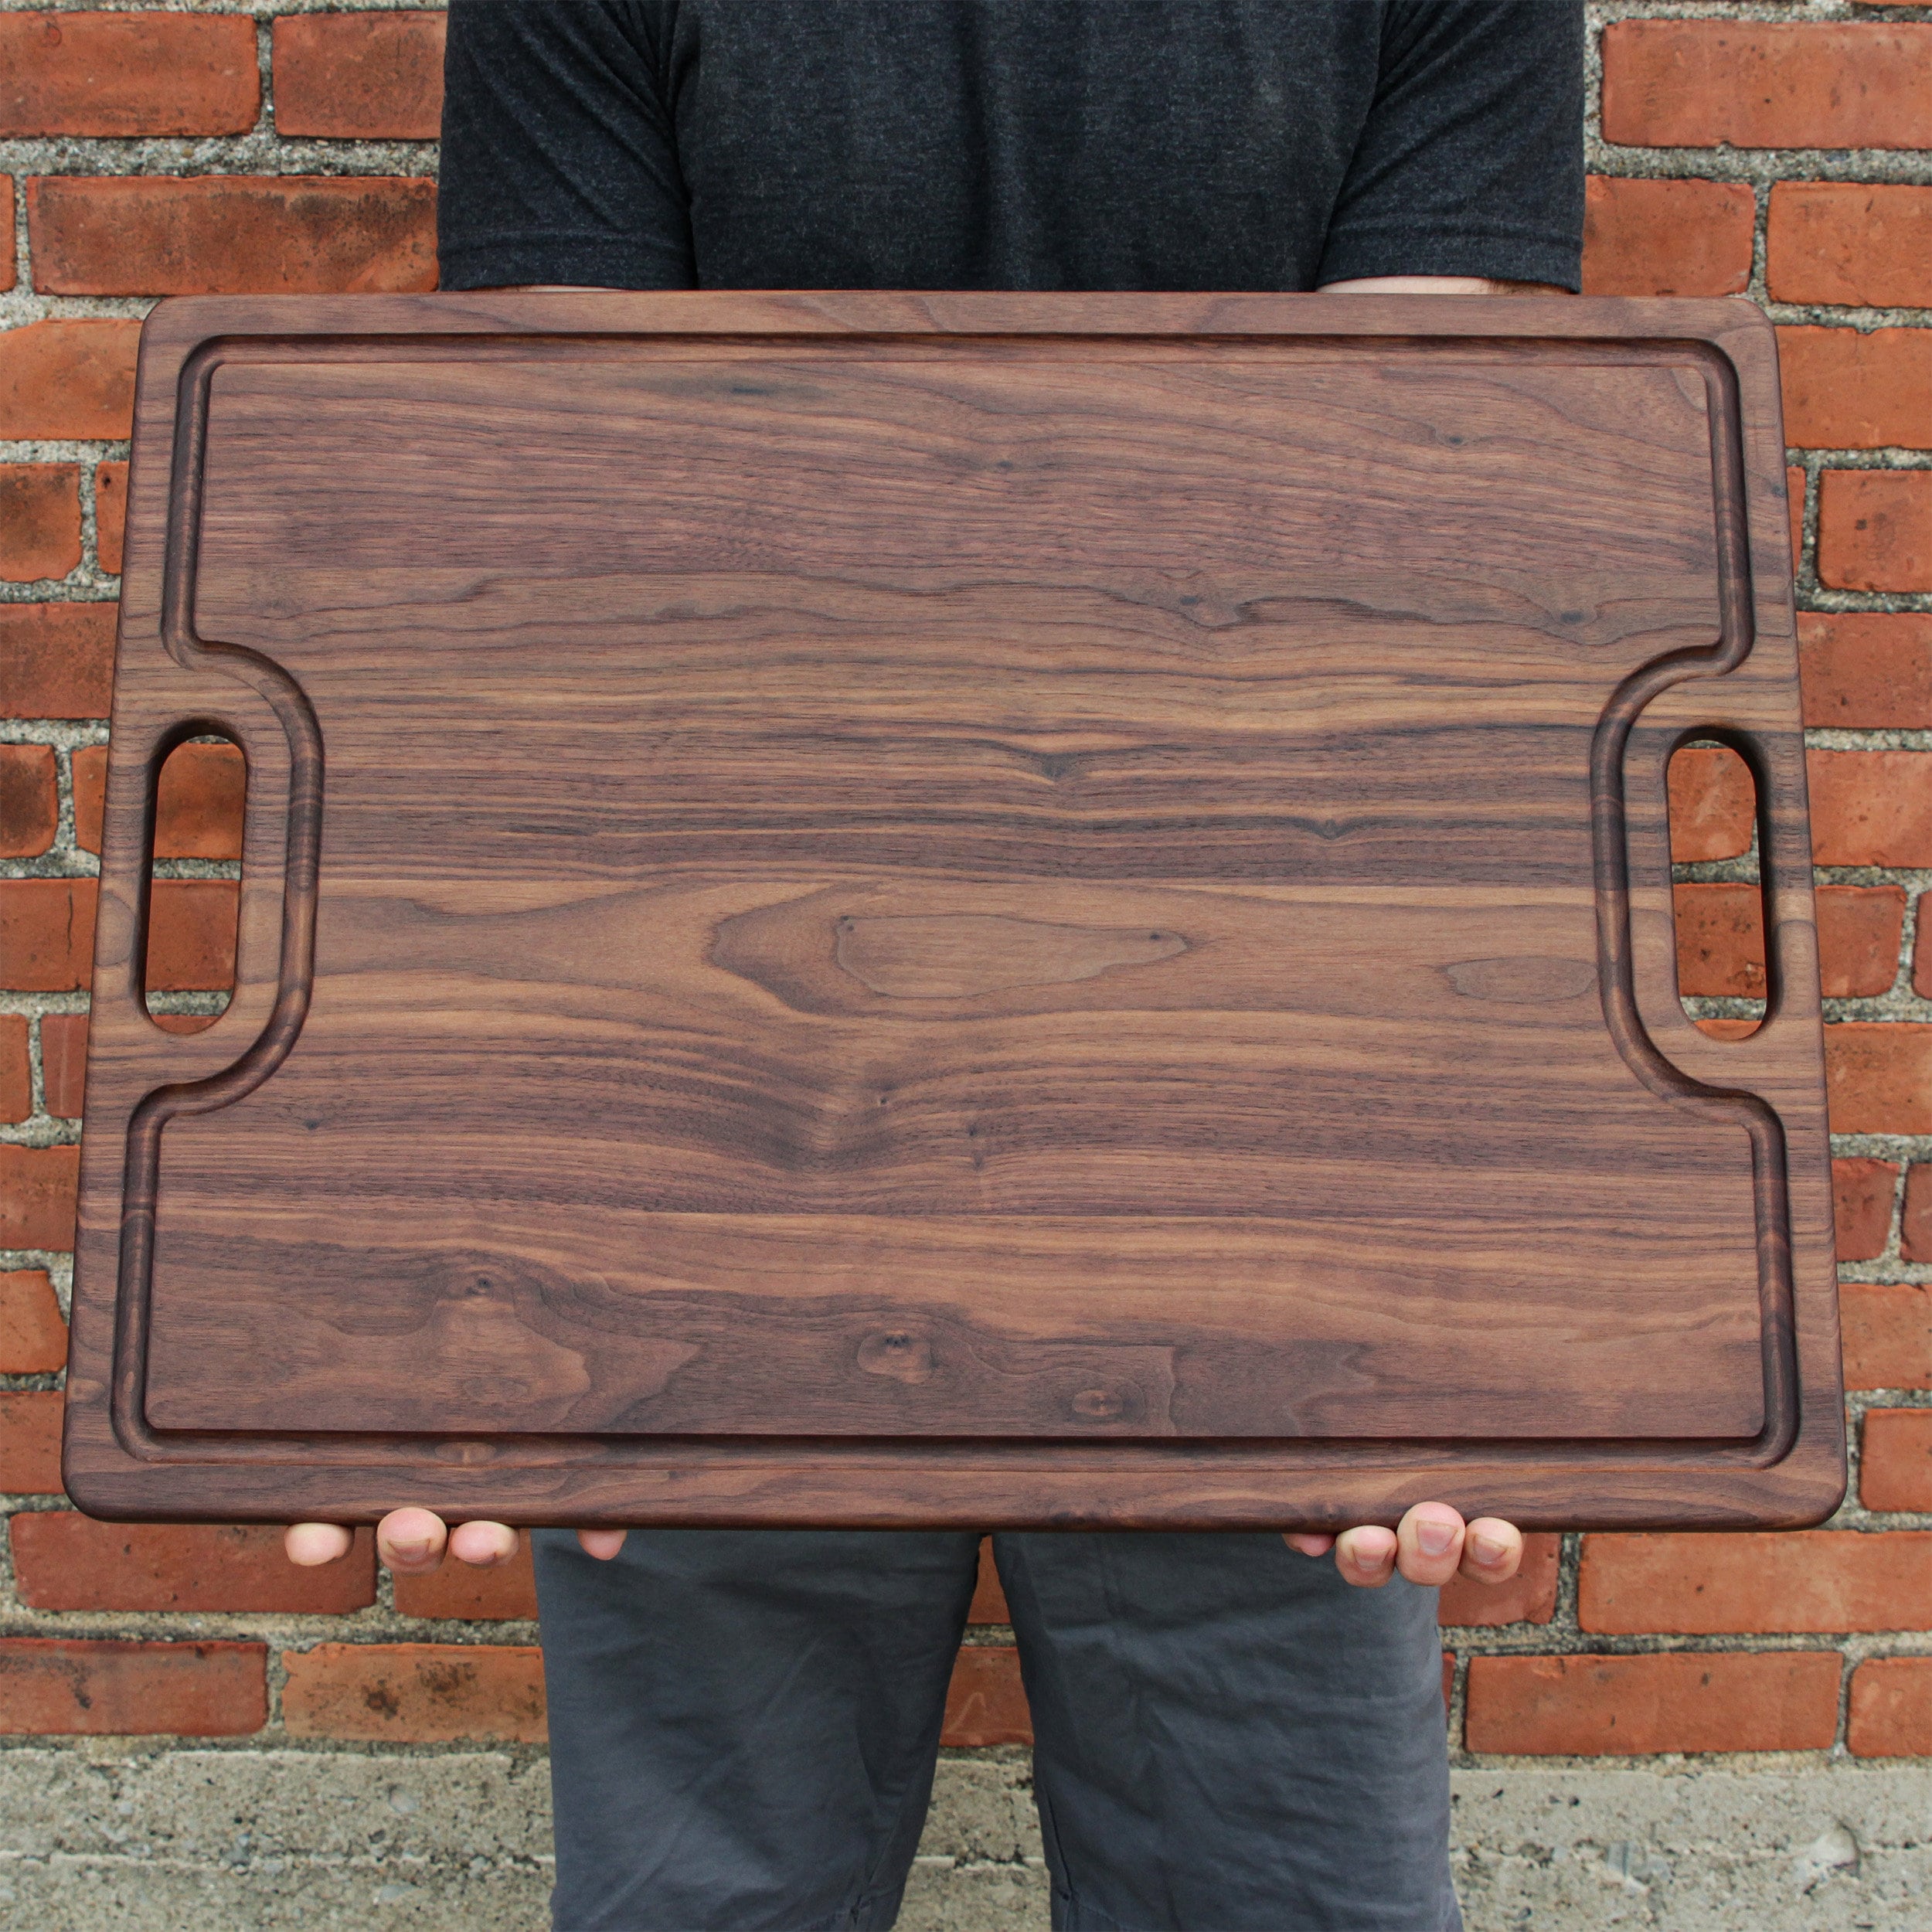 JJGeorge Grill Mat, Best Large Cutting Board